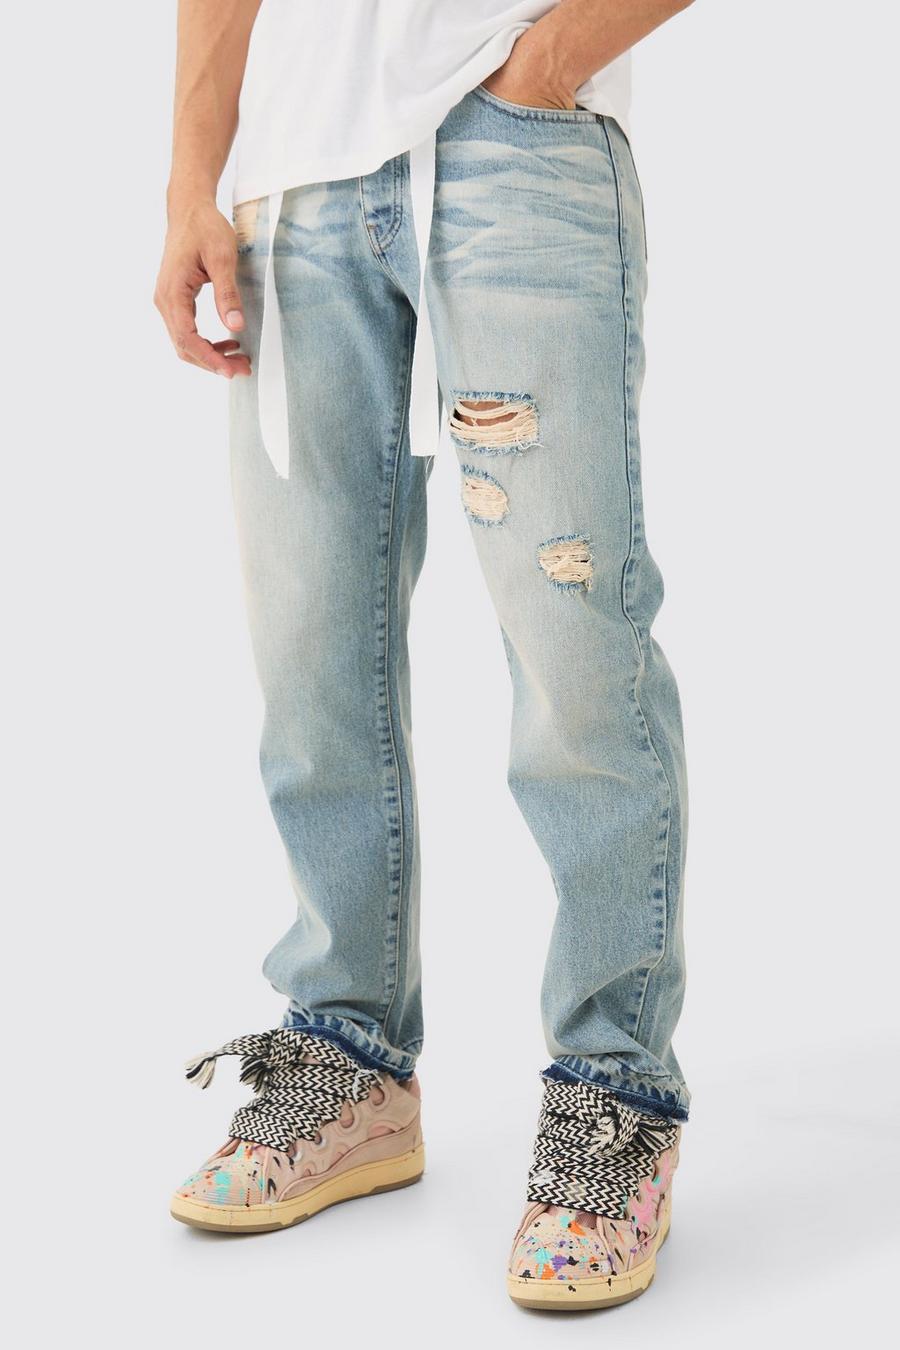 Lockere zerrissene Jeans mit Kordelzug in Antikblau, Antique blue